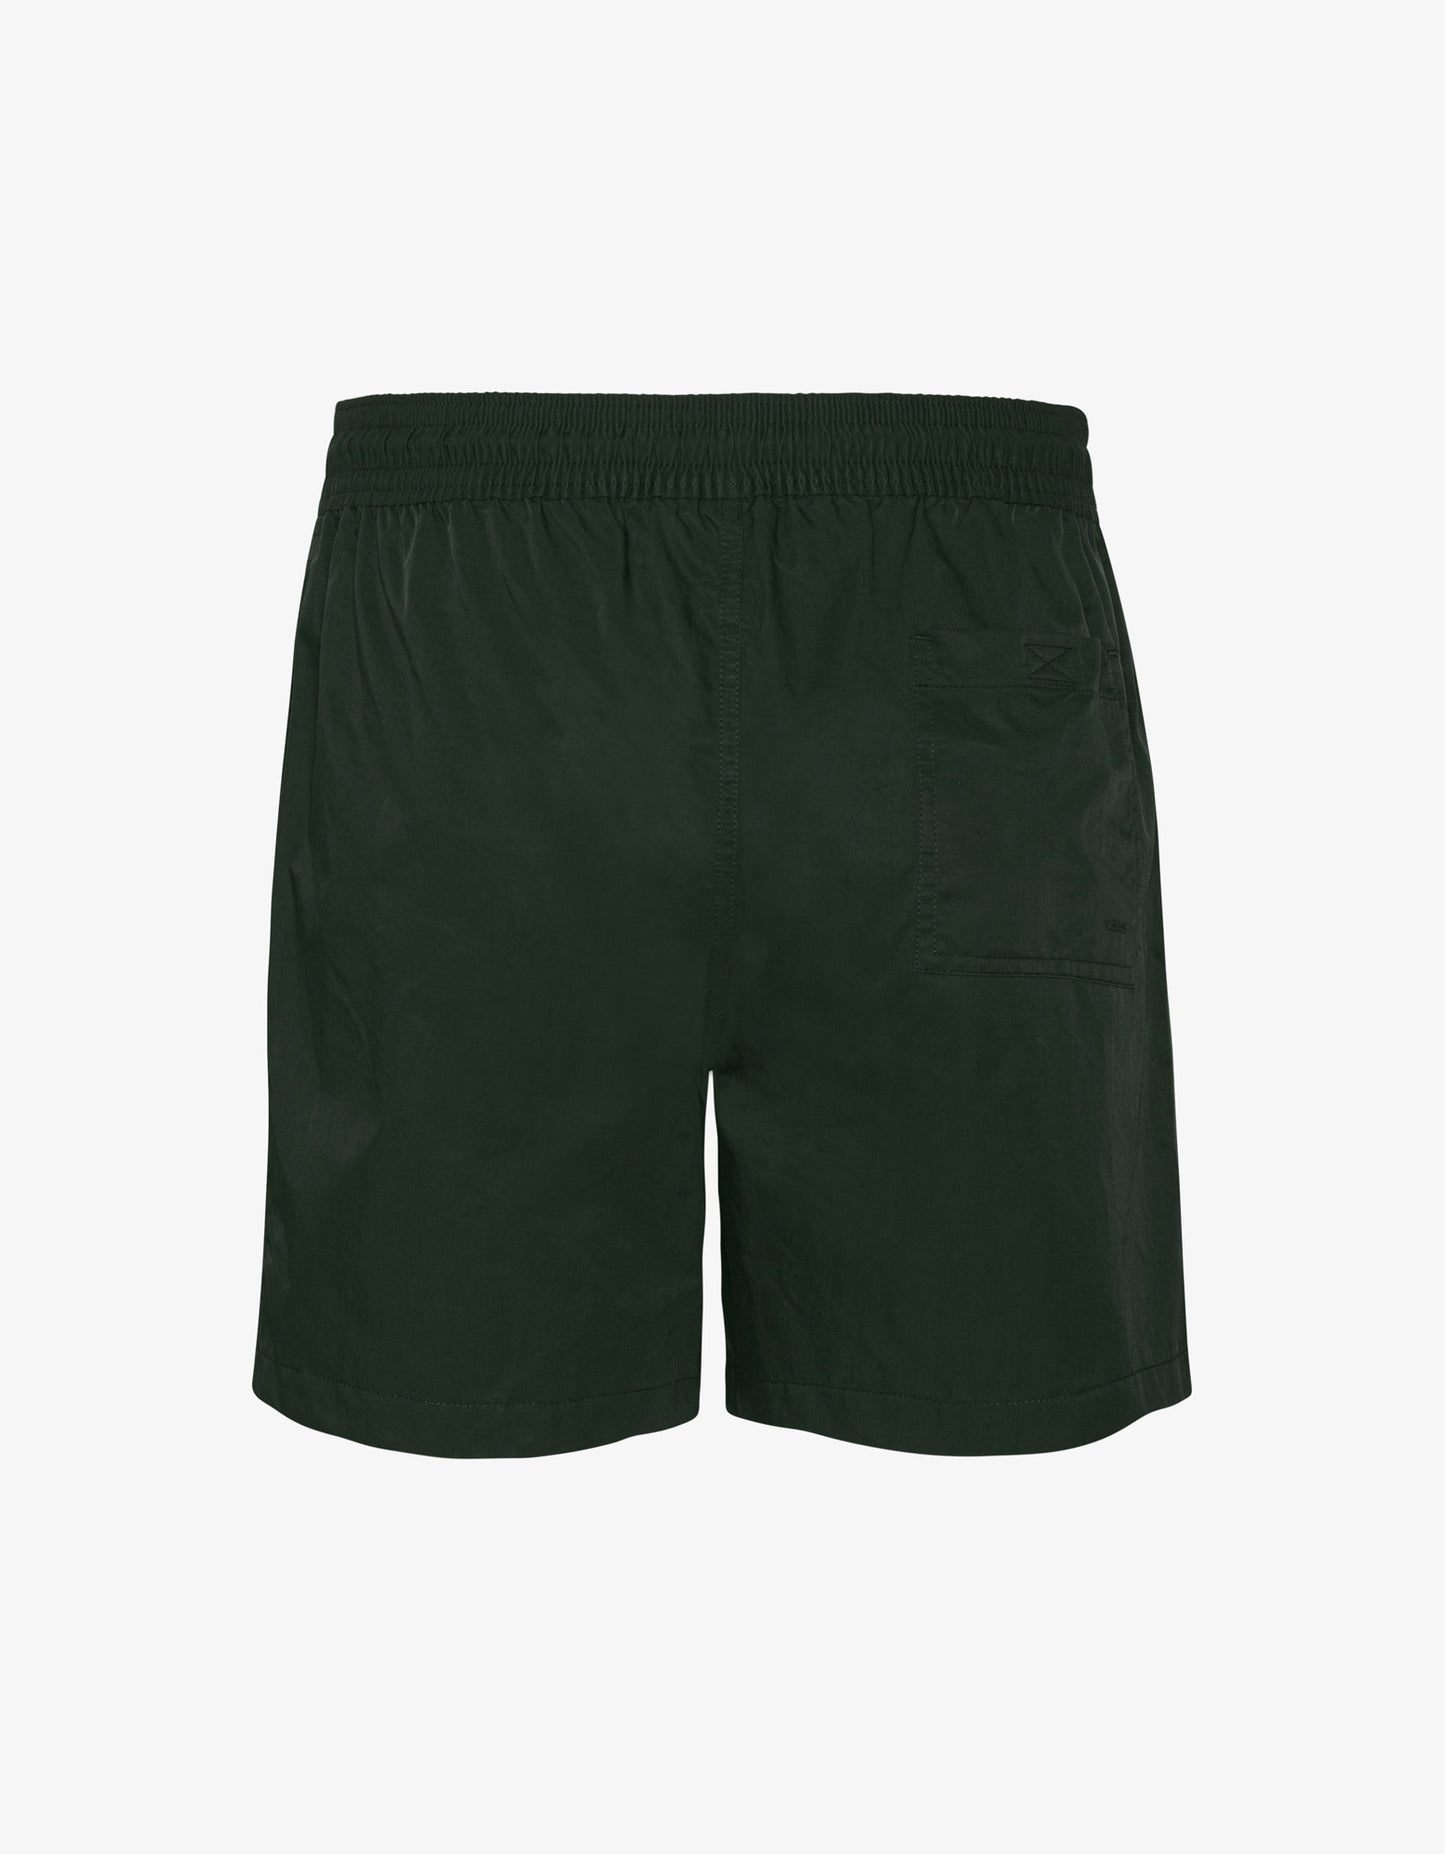 Colorful Standard - Swim Shorts - Hunter Green